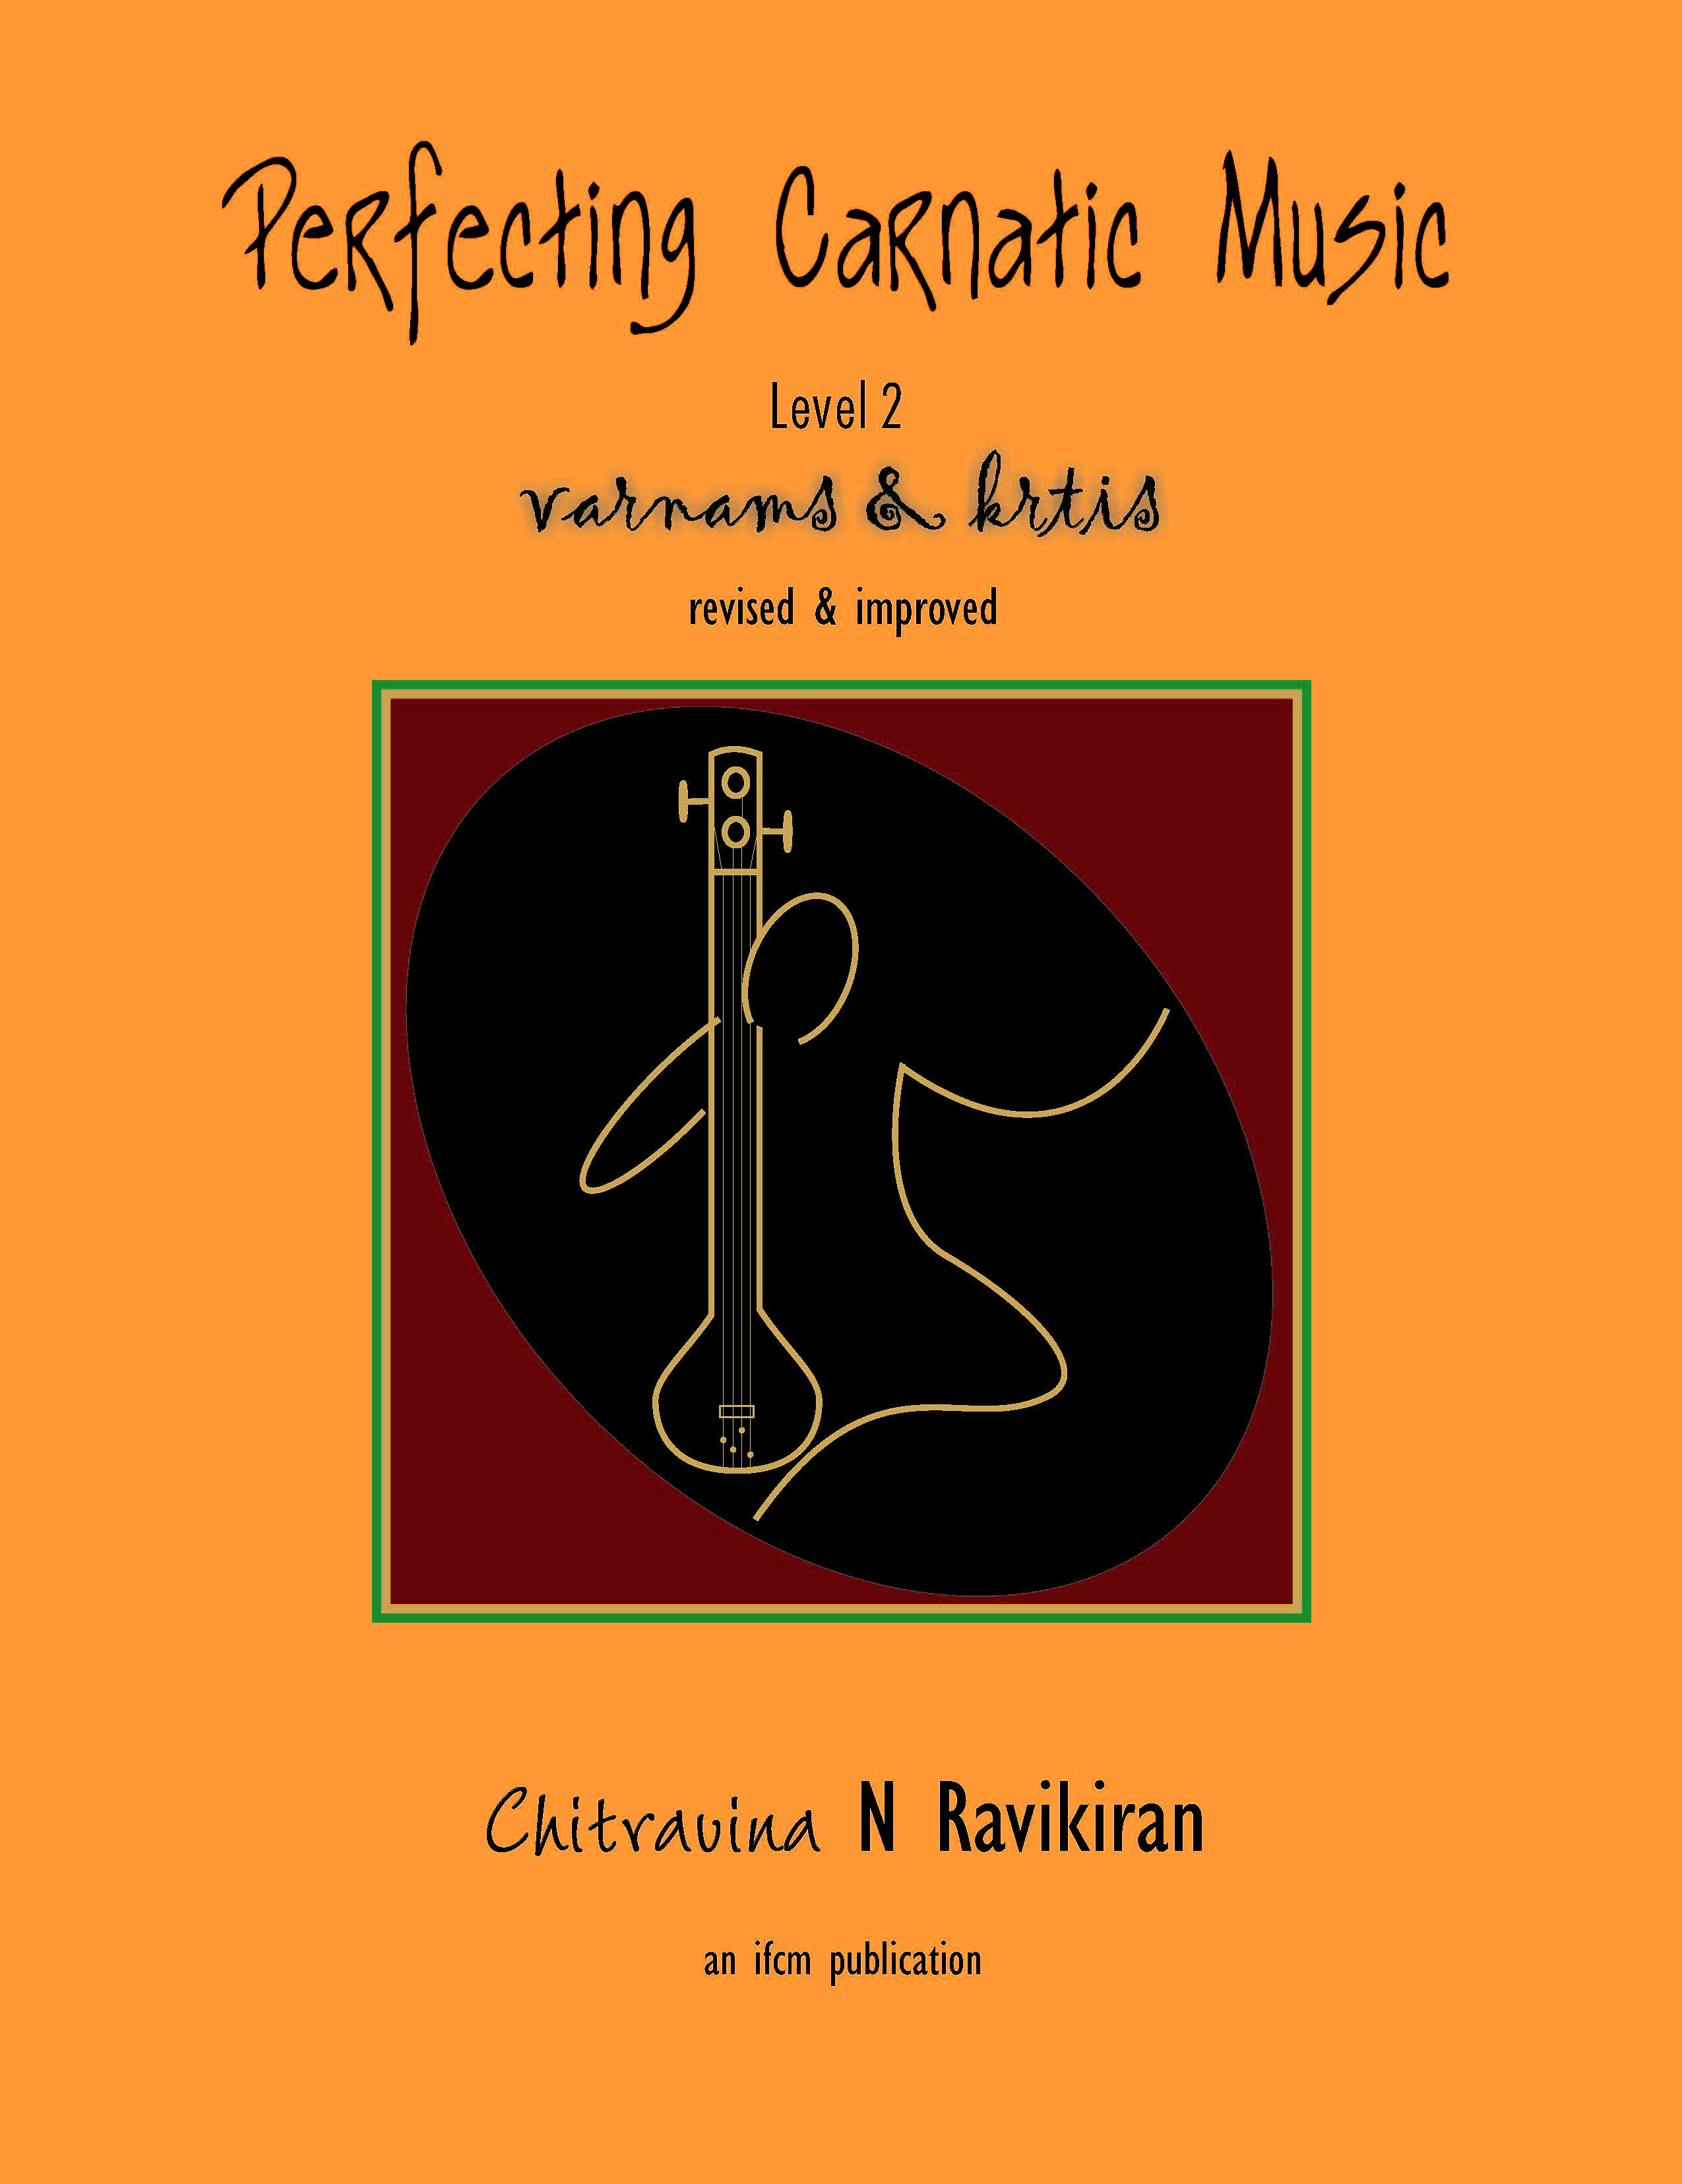 teach carnatic music online